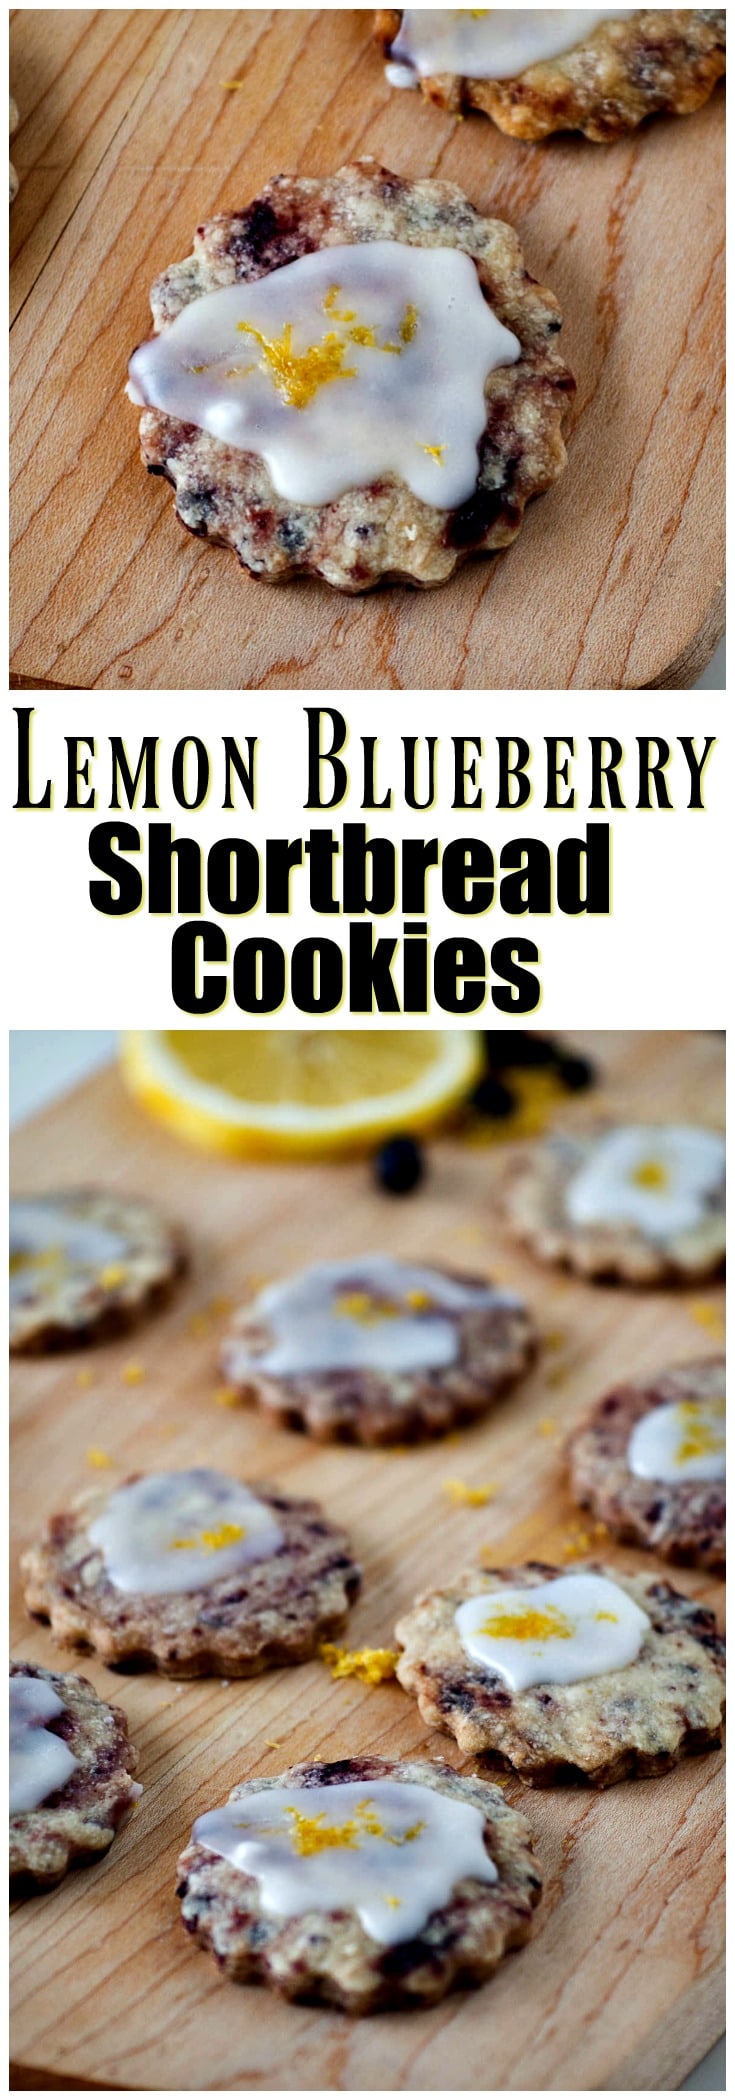 Lemon Blueberry Shortbread Cookies | Blueberry Shortbread Cookies with Lemon Glaze | Tea Time Cookies | Shortbread Cookies in a Food Processor | Fruity Cookies